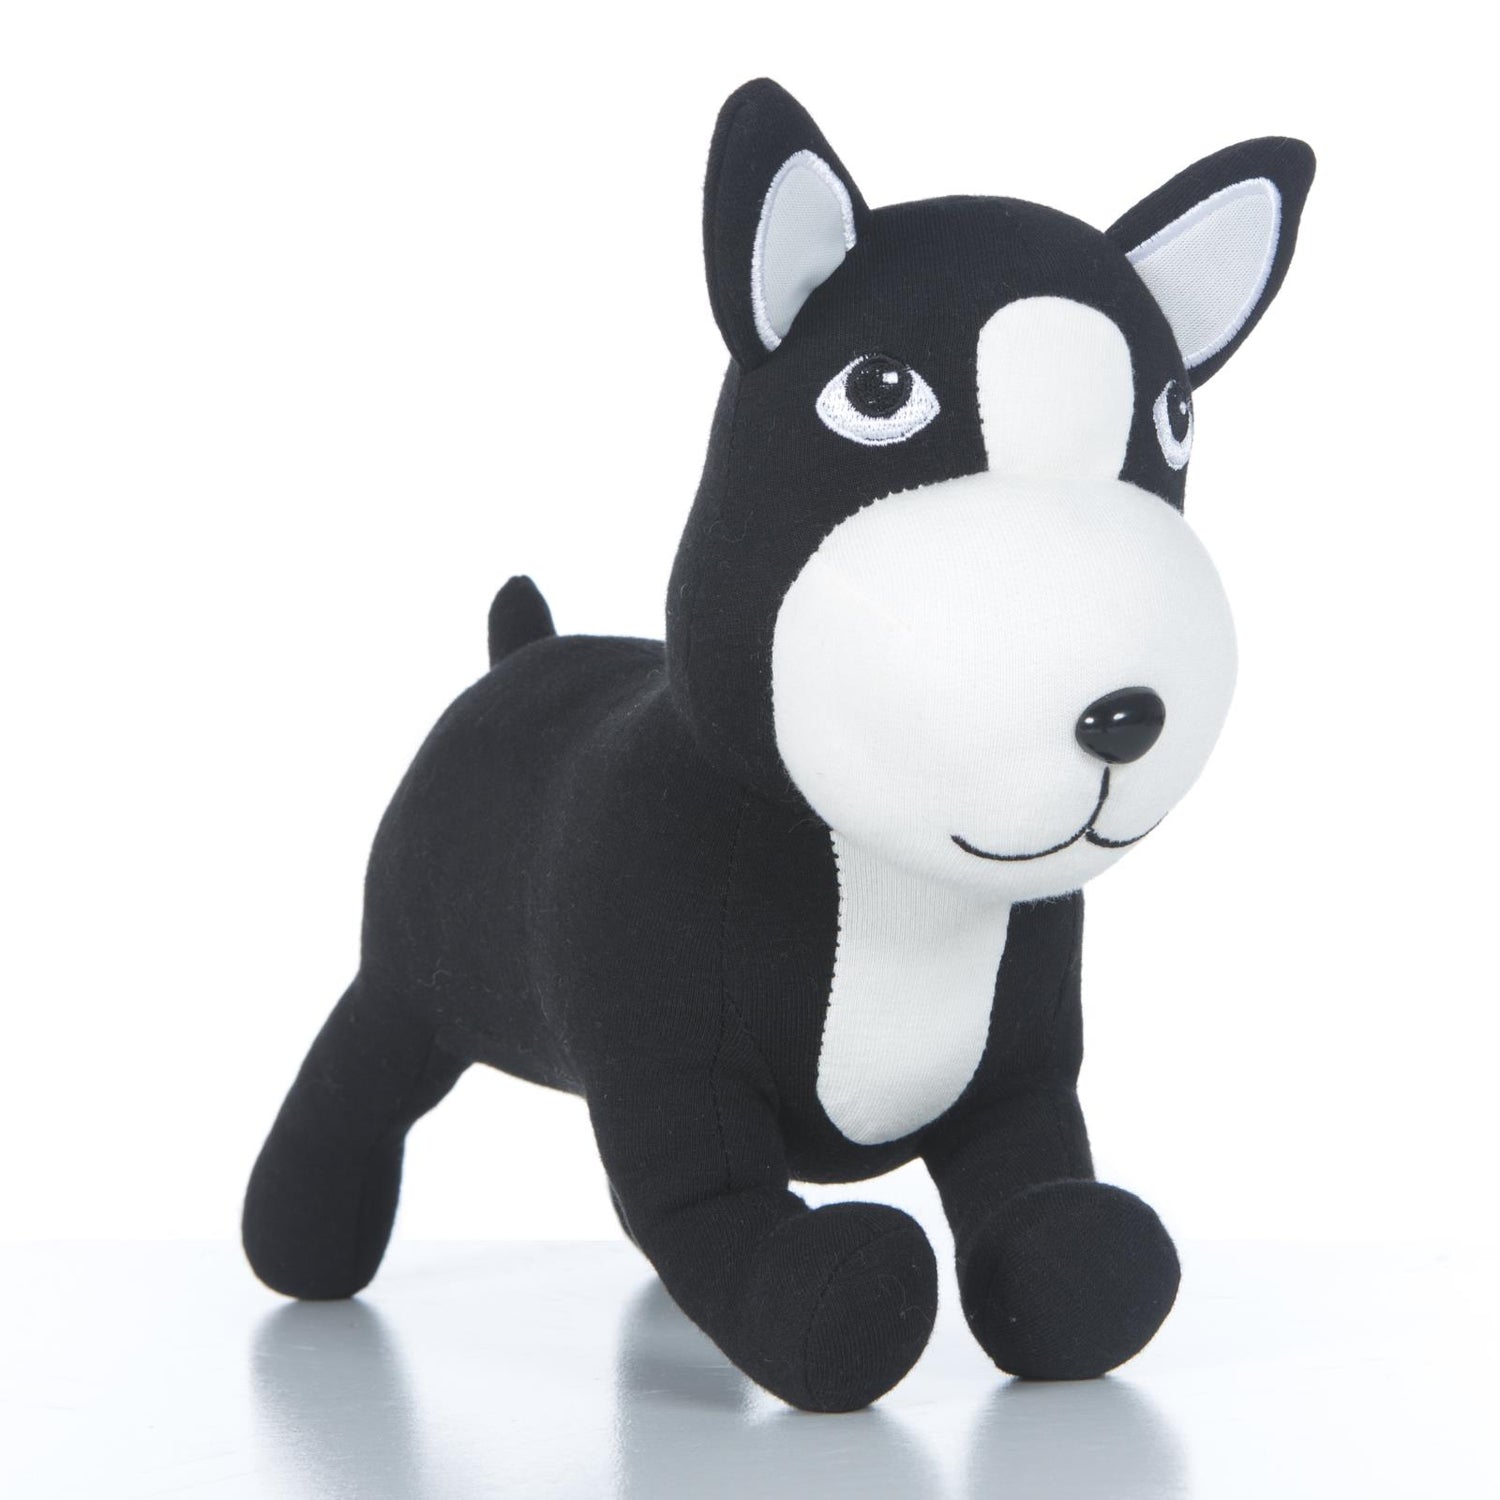 Plush Toy: Frank the Bulldog